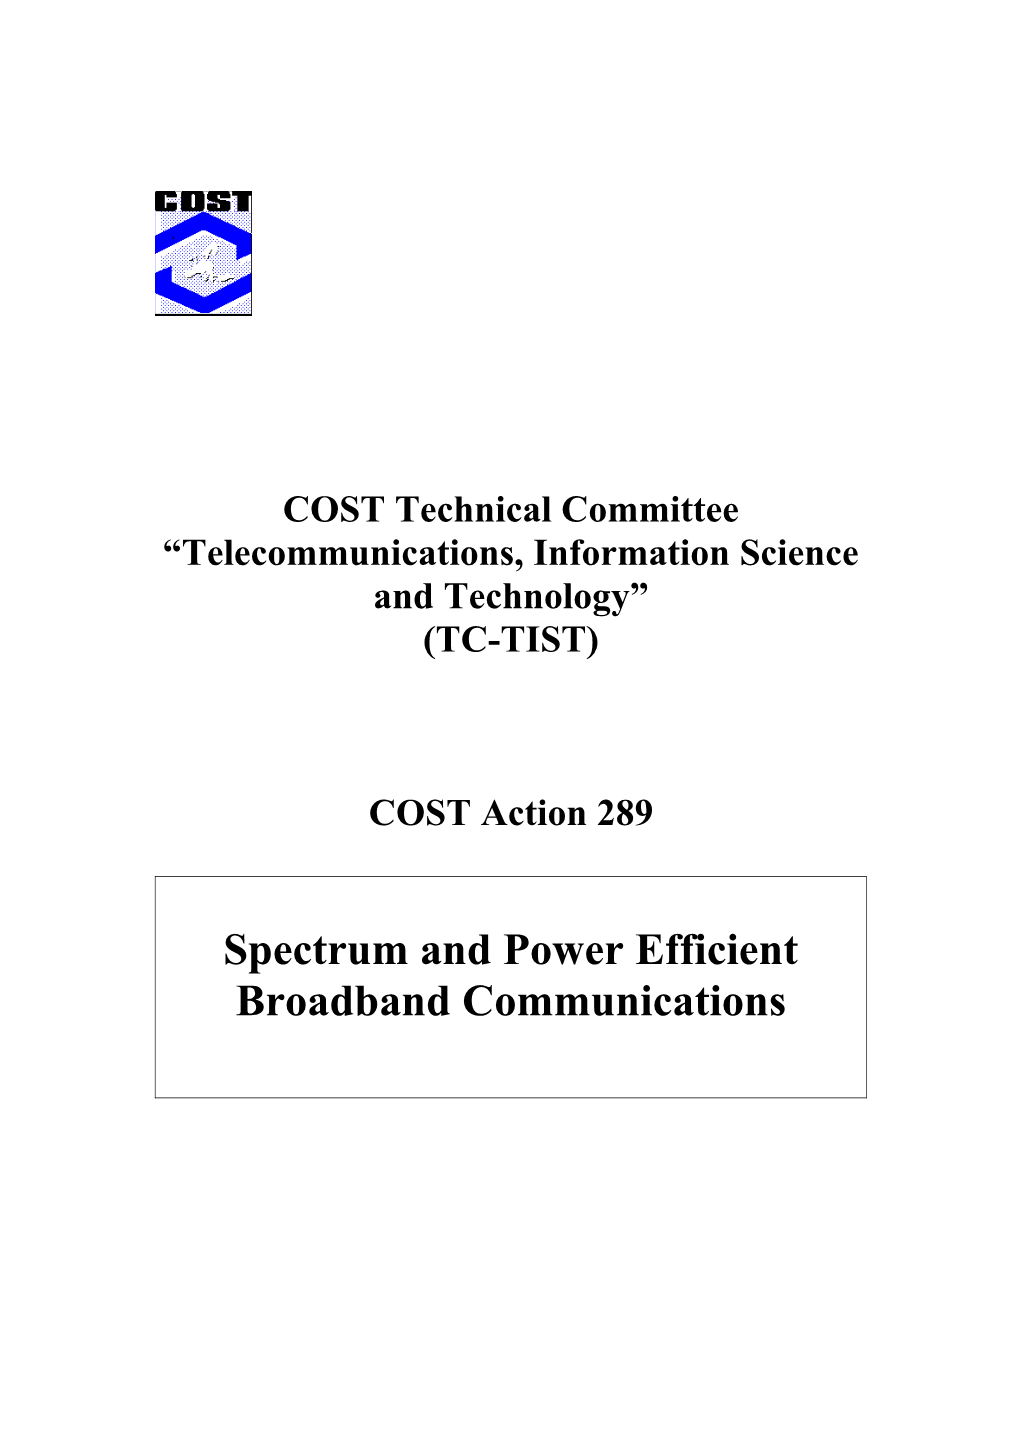 Spectrum and Power Efficient Broadband Communications